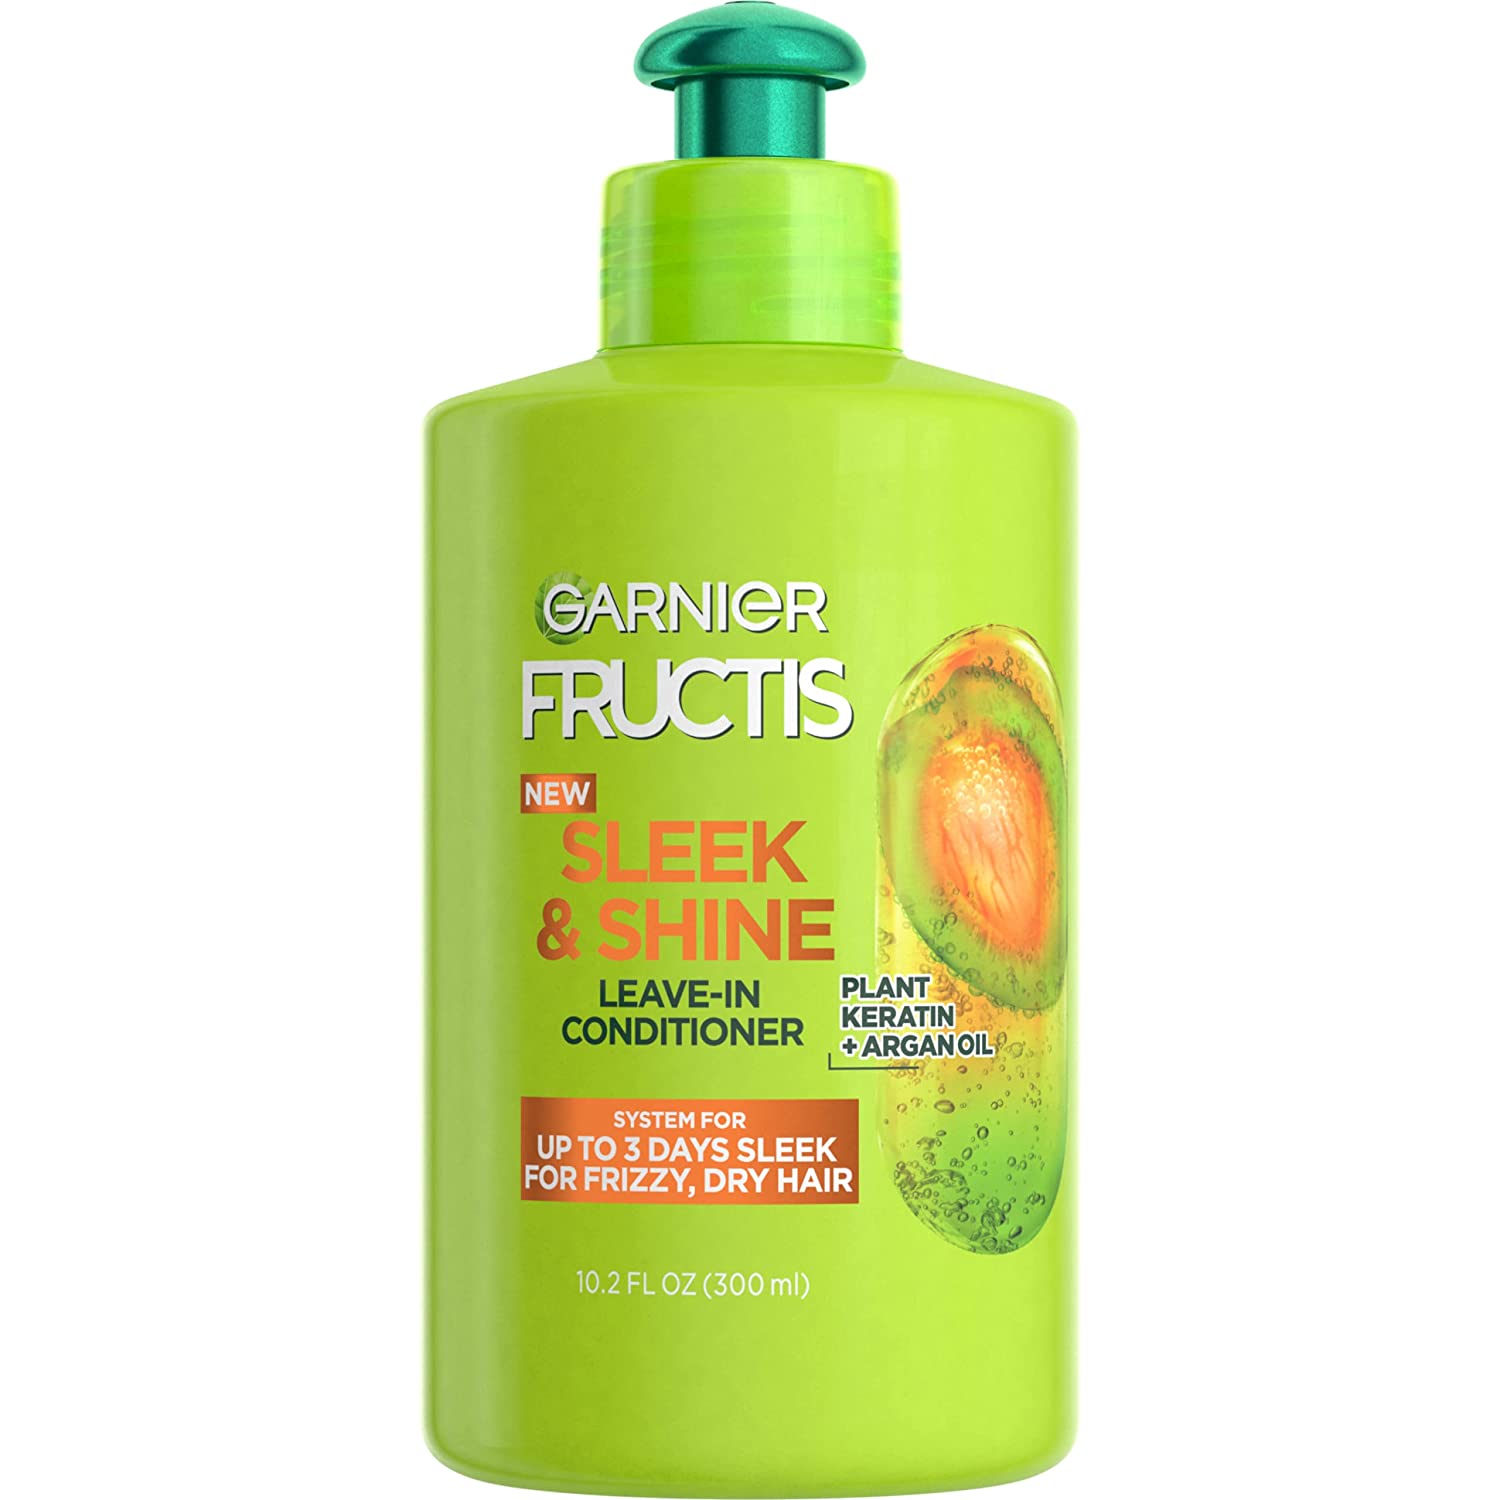 Garnier Fructis Sleek and Shine スムース リーブイン コンディショニング クリーム 300ml